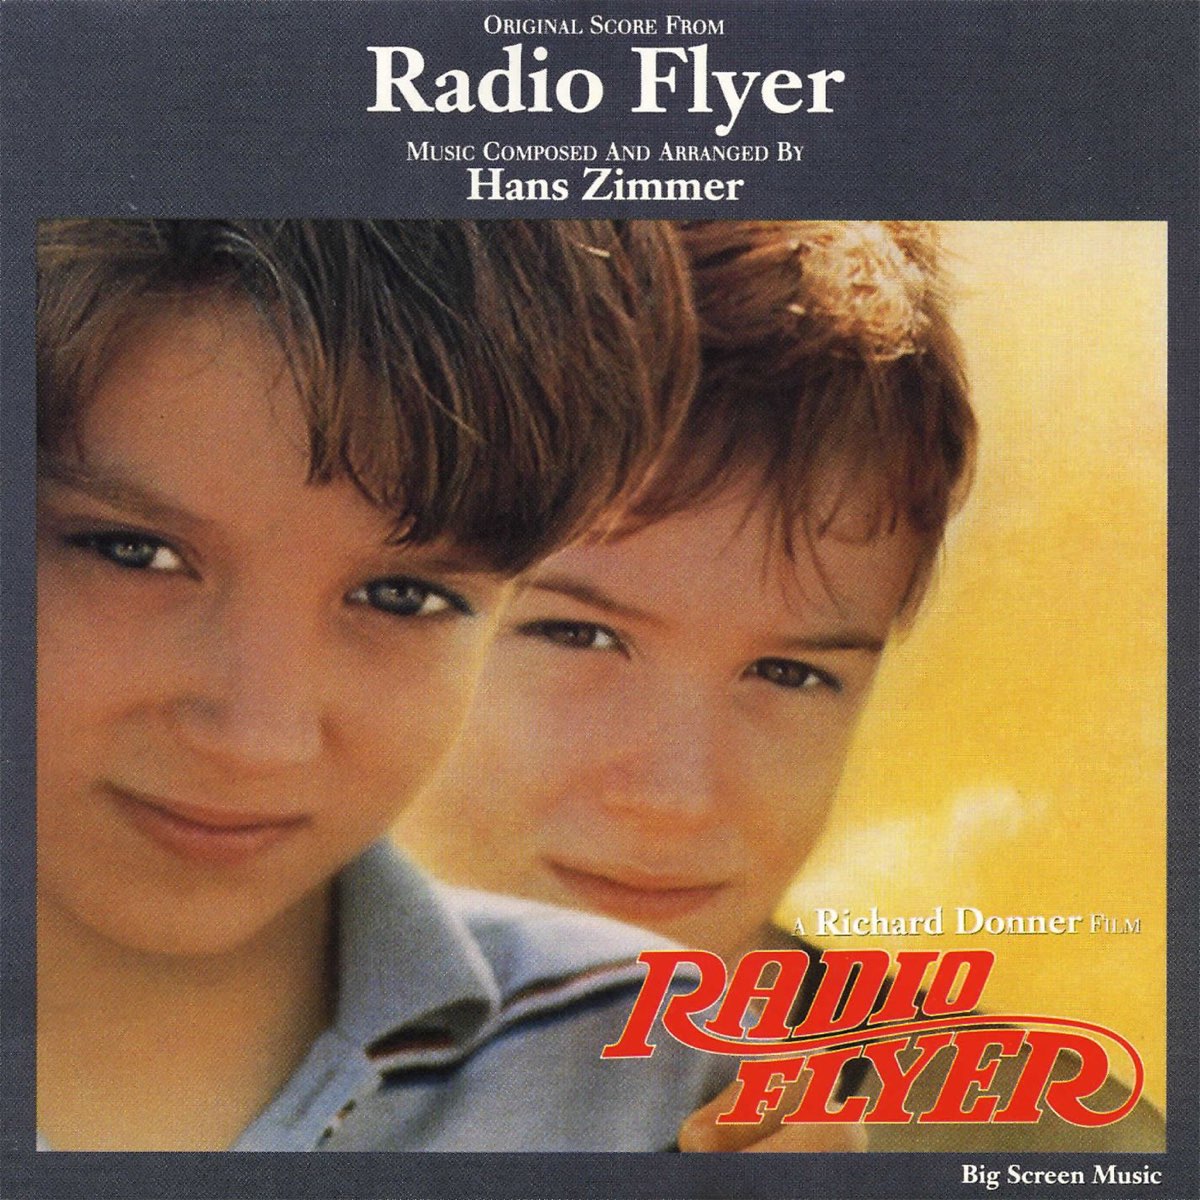 Radio Flyer (Original Score) by Hans Zimmer on Apple Music